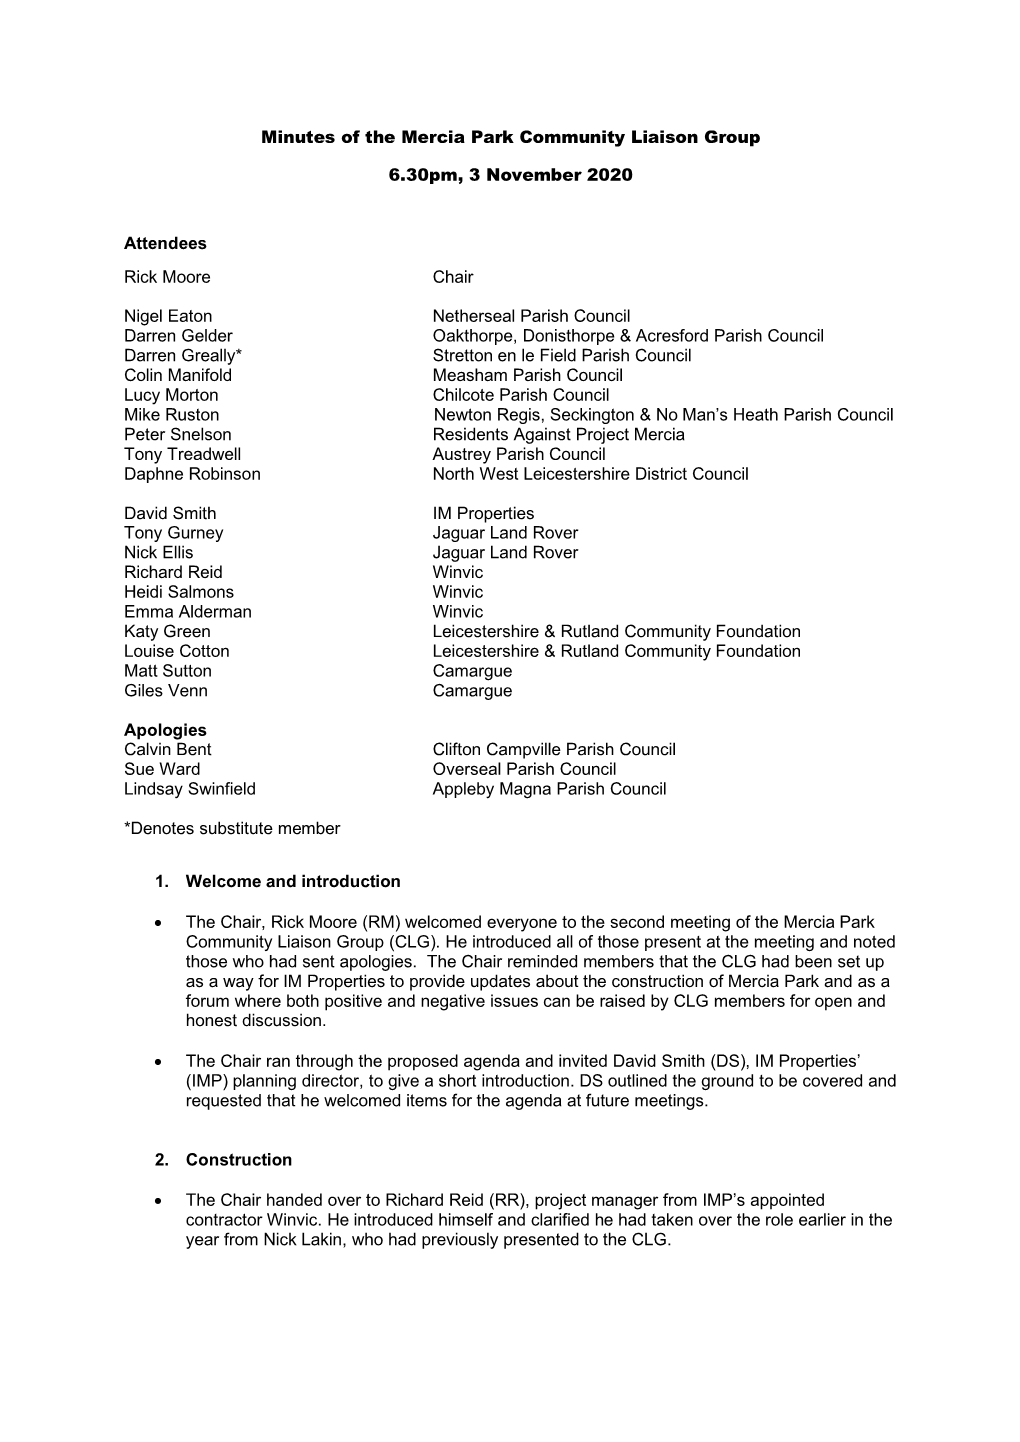 Minutes of Mercia Park Community Liaison Group 3 November 2020.Pdf